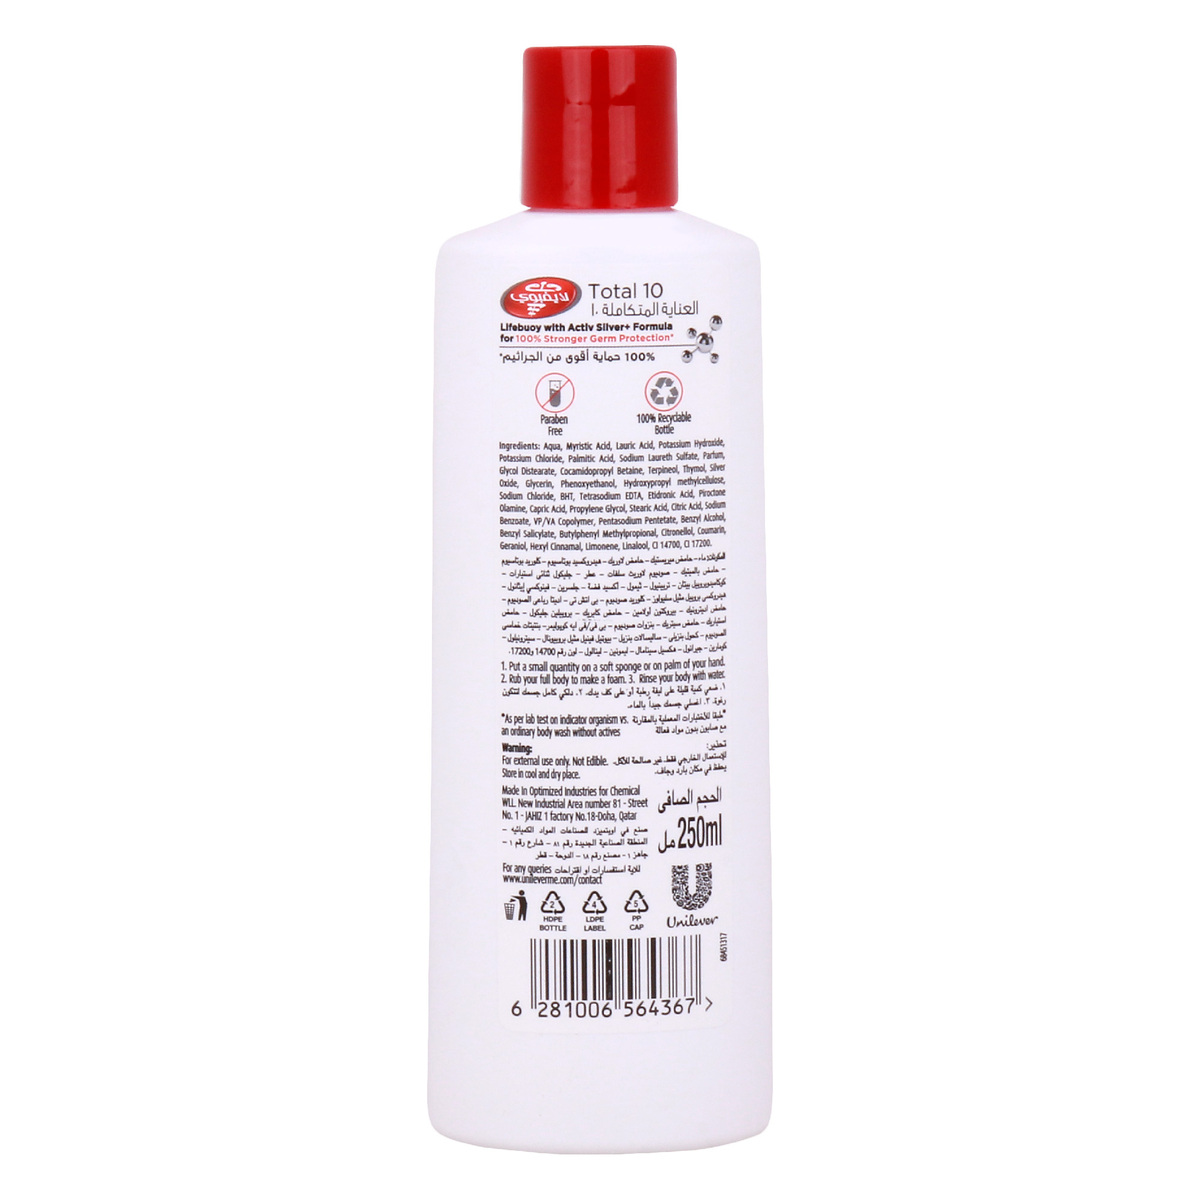 Lifebuoy Anti Bacterial Body Wash with Activ Silver Formula, 250 ml